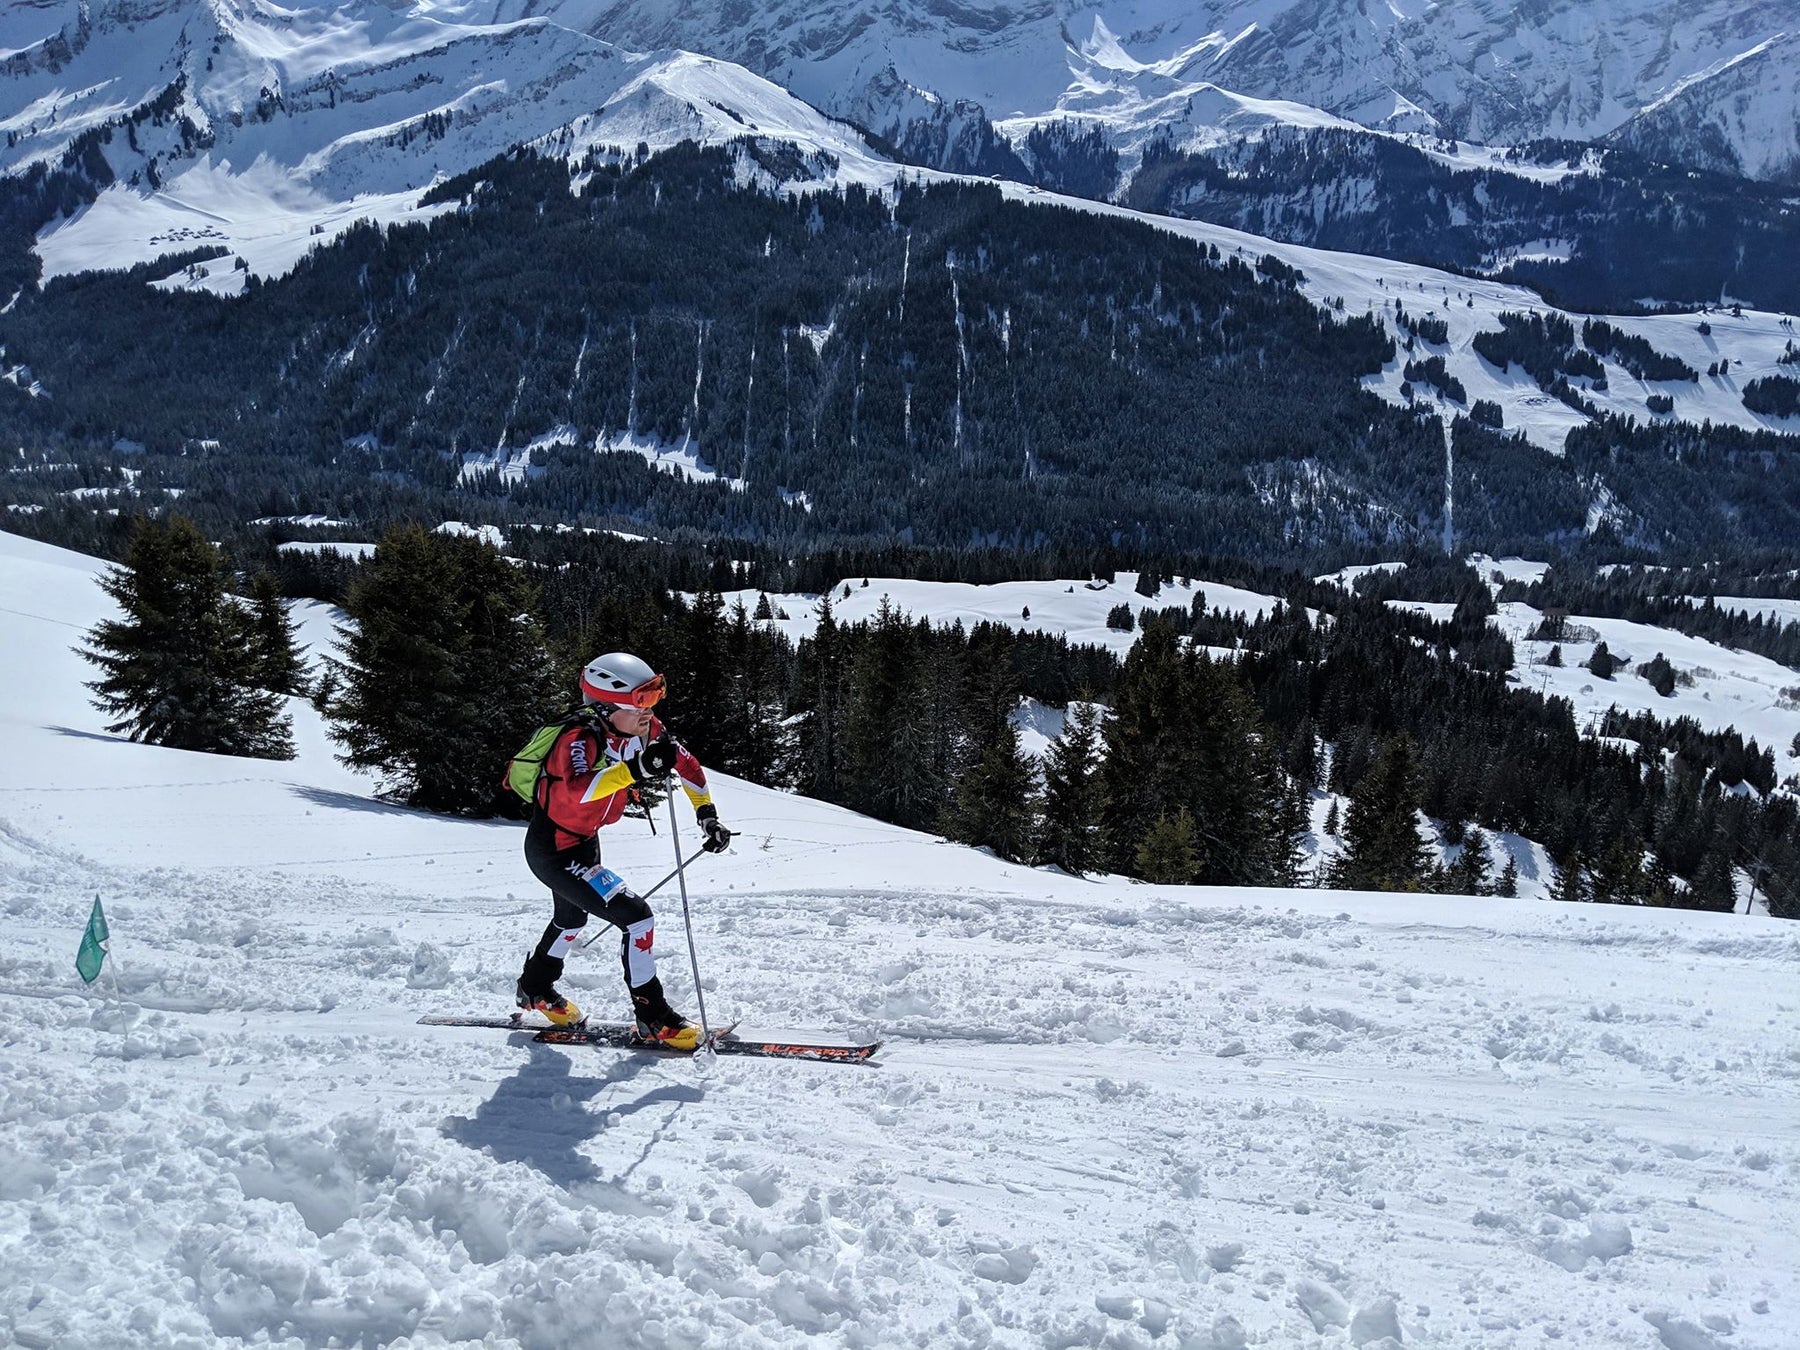 2019 Ski-Mountaineering World Championships - Behind the Scenes